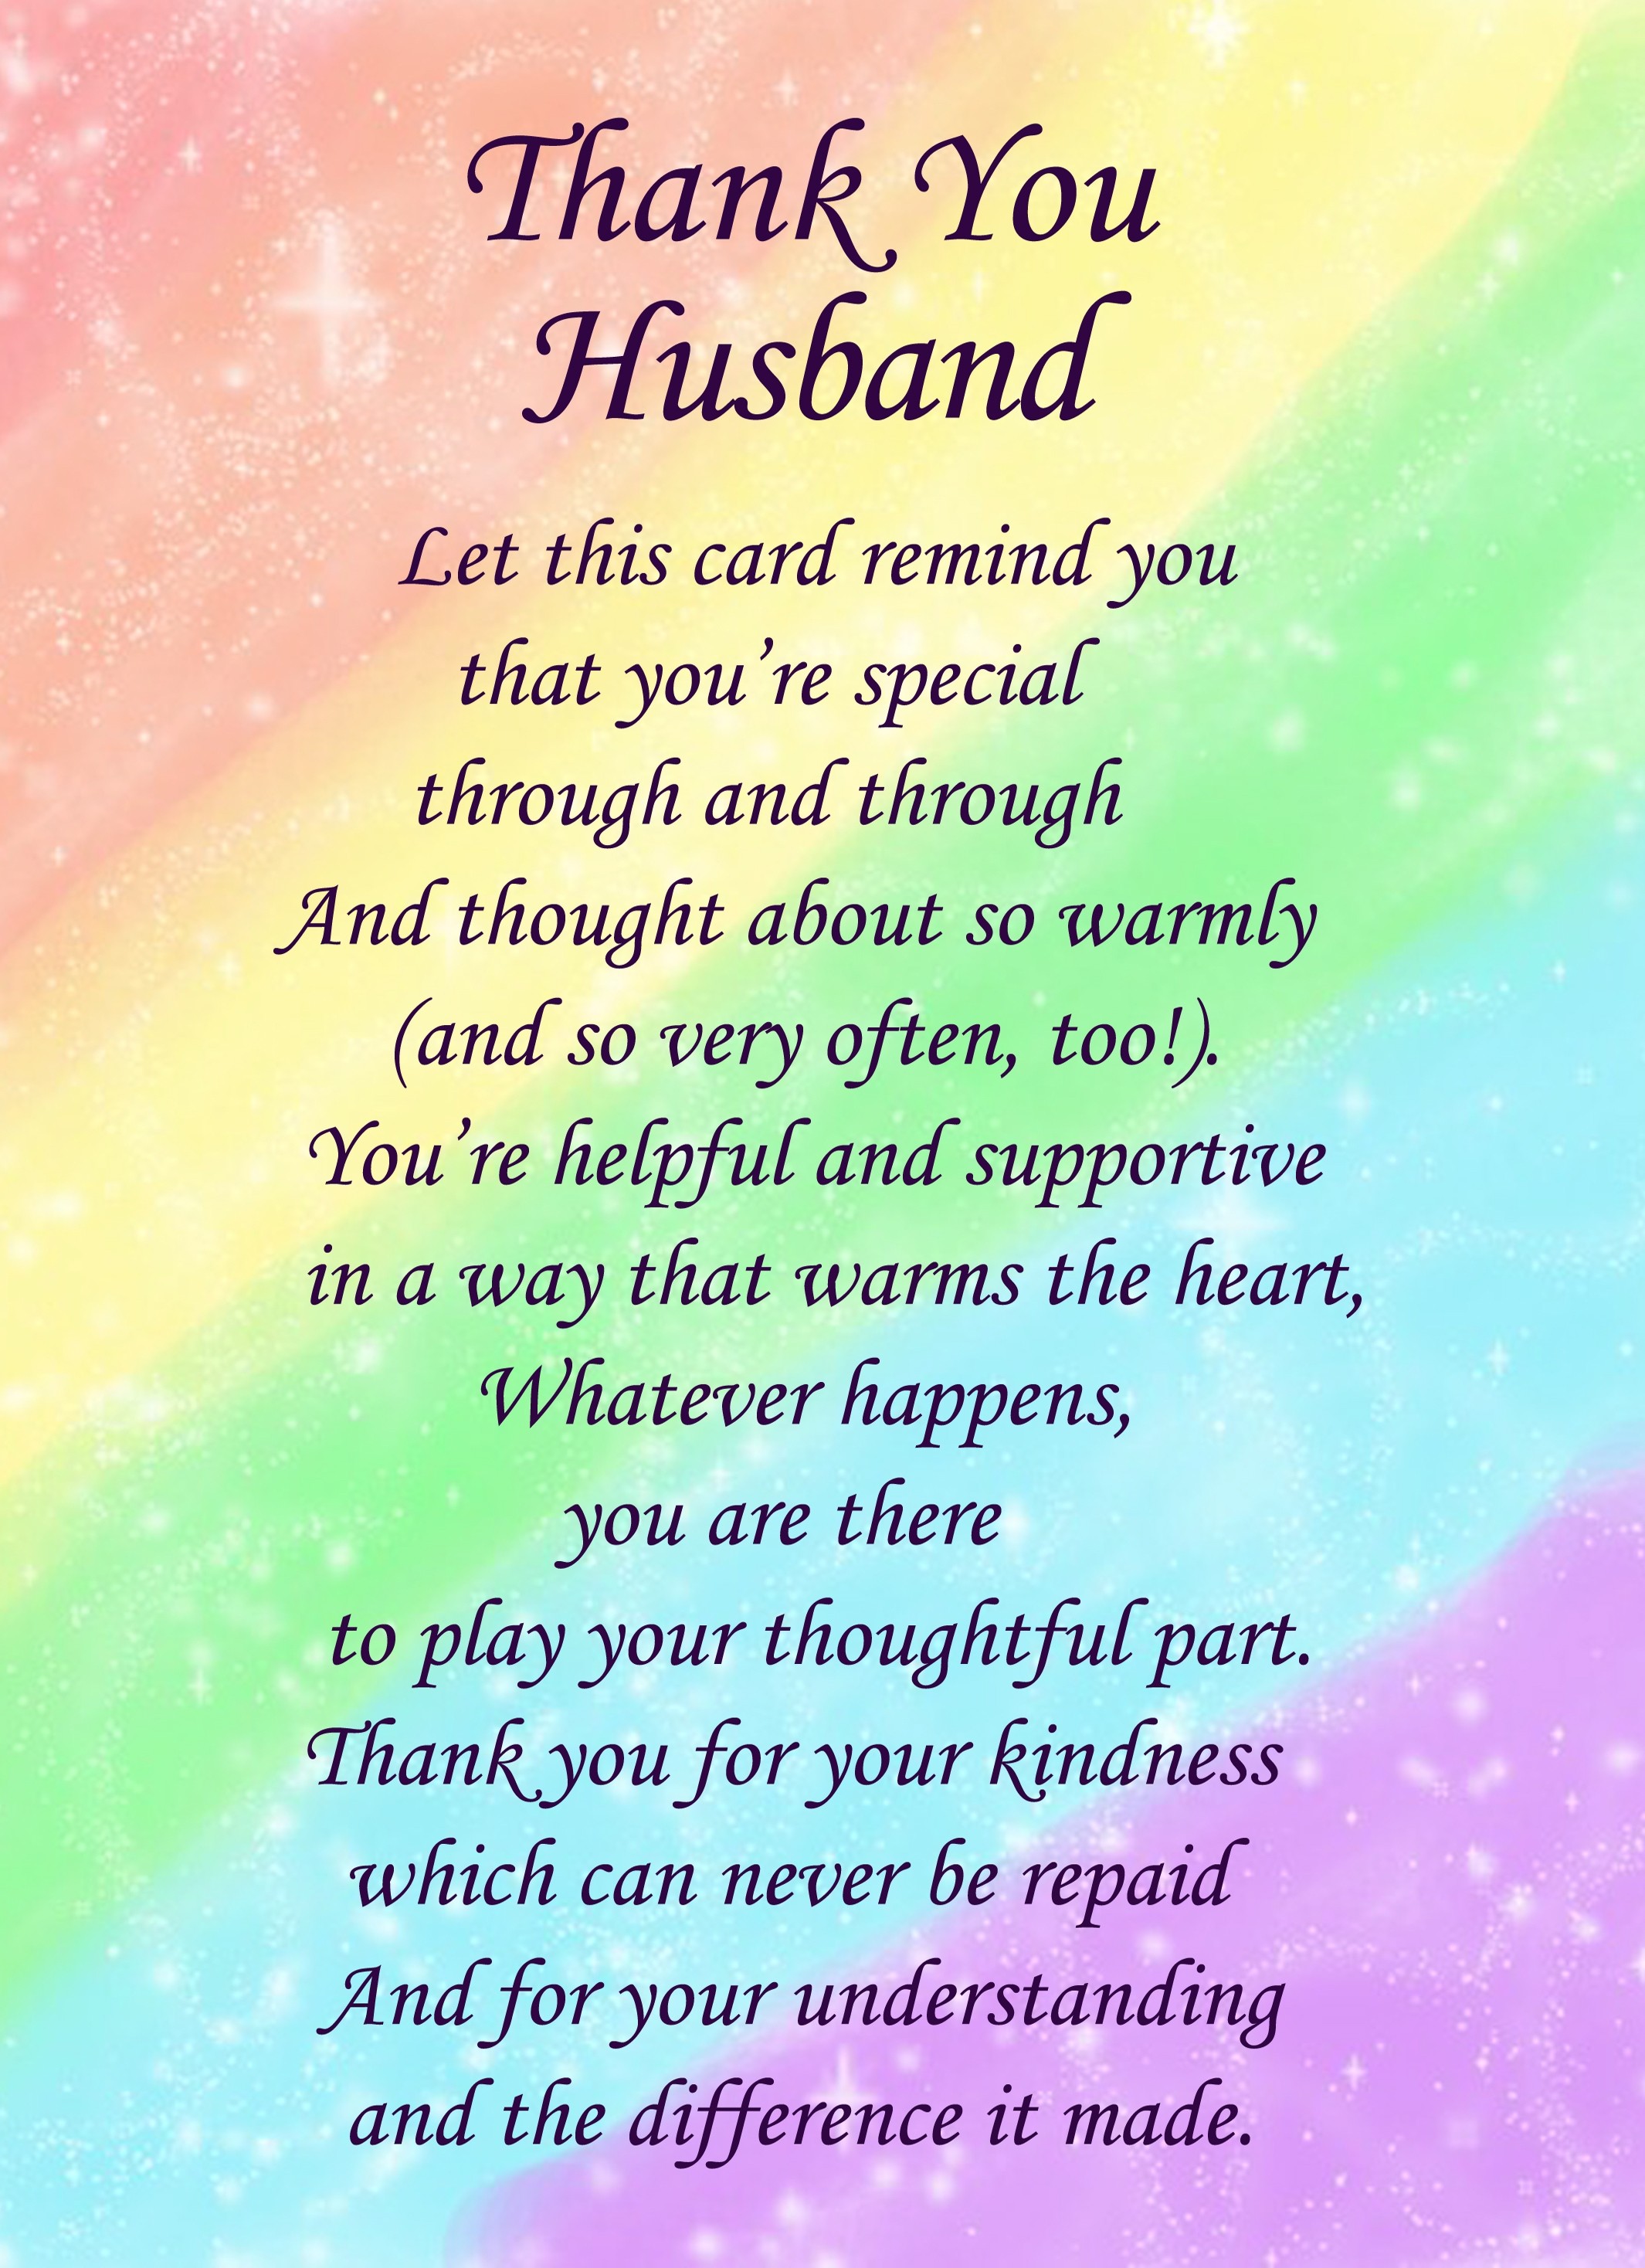 Thank You 'Husband' Poem Verse Greeting Card